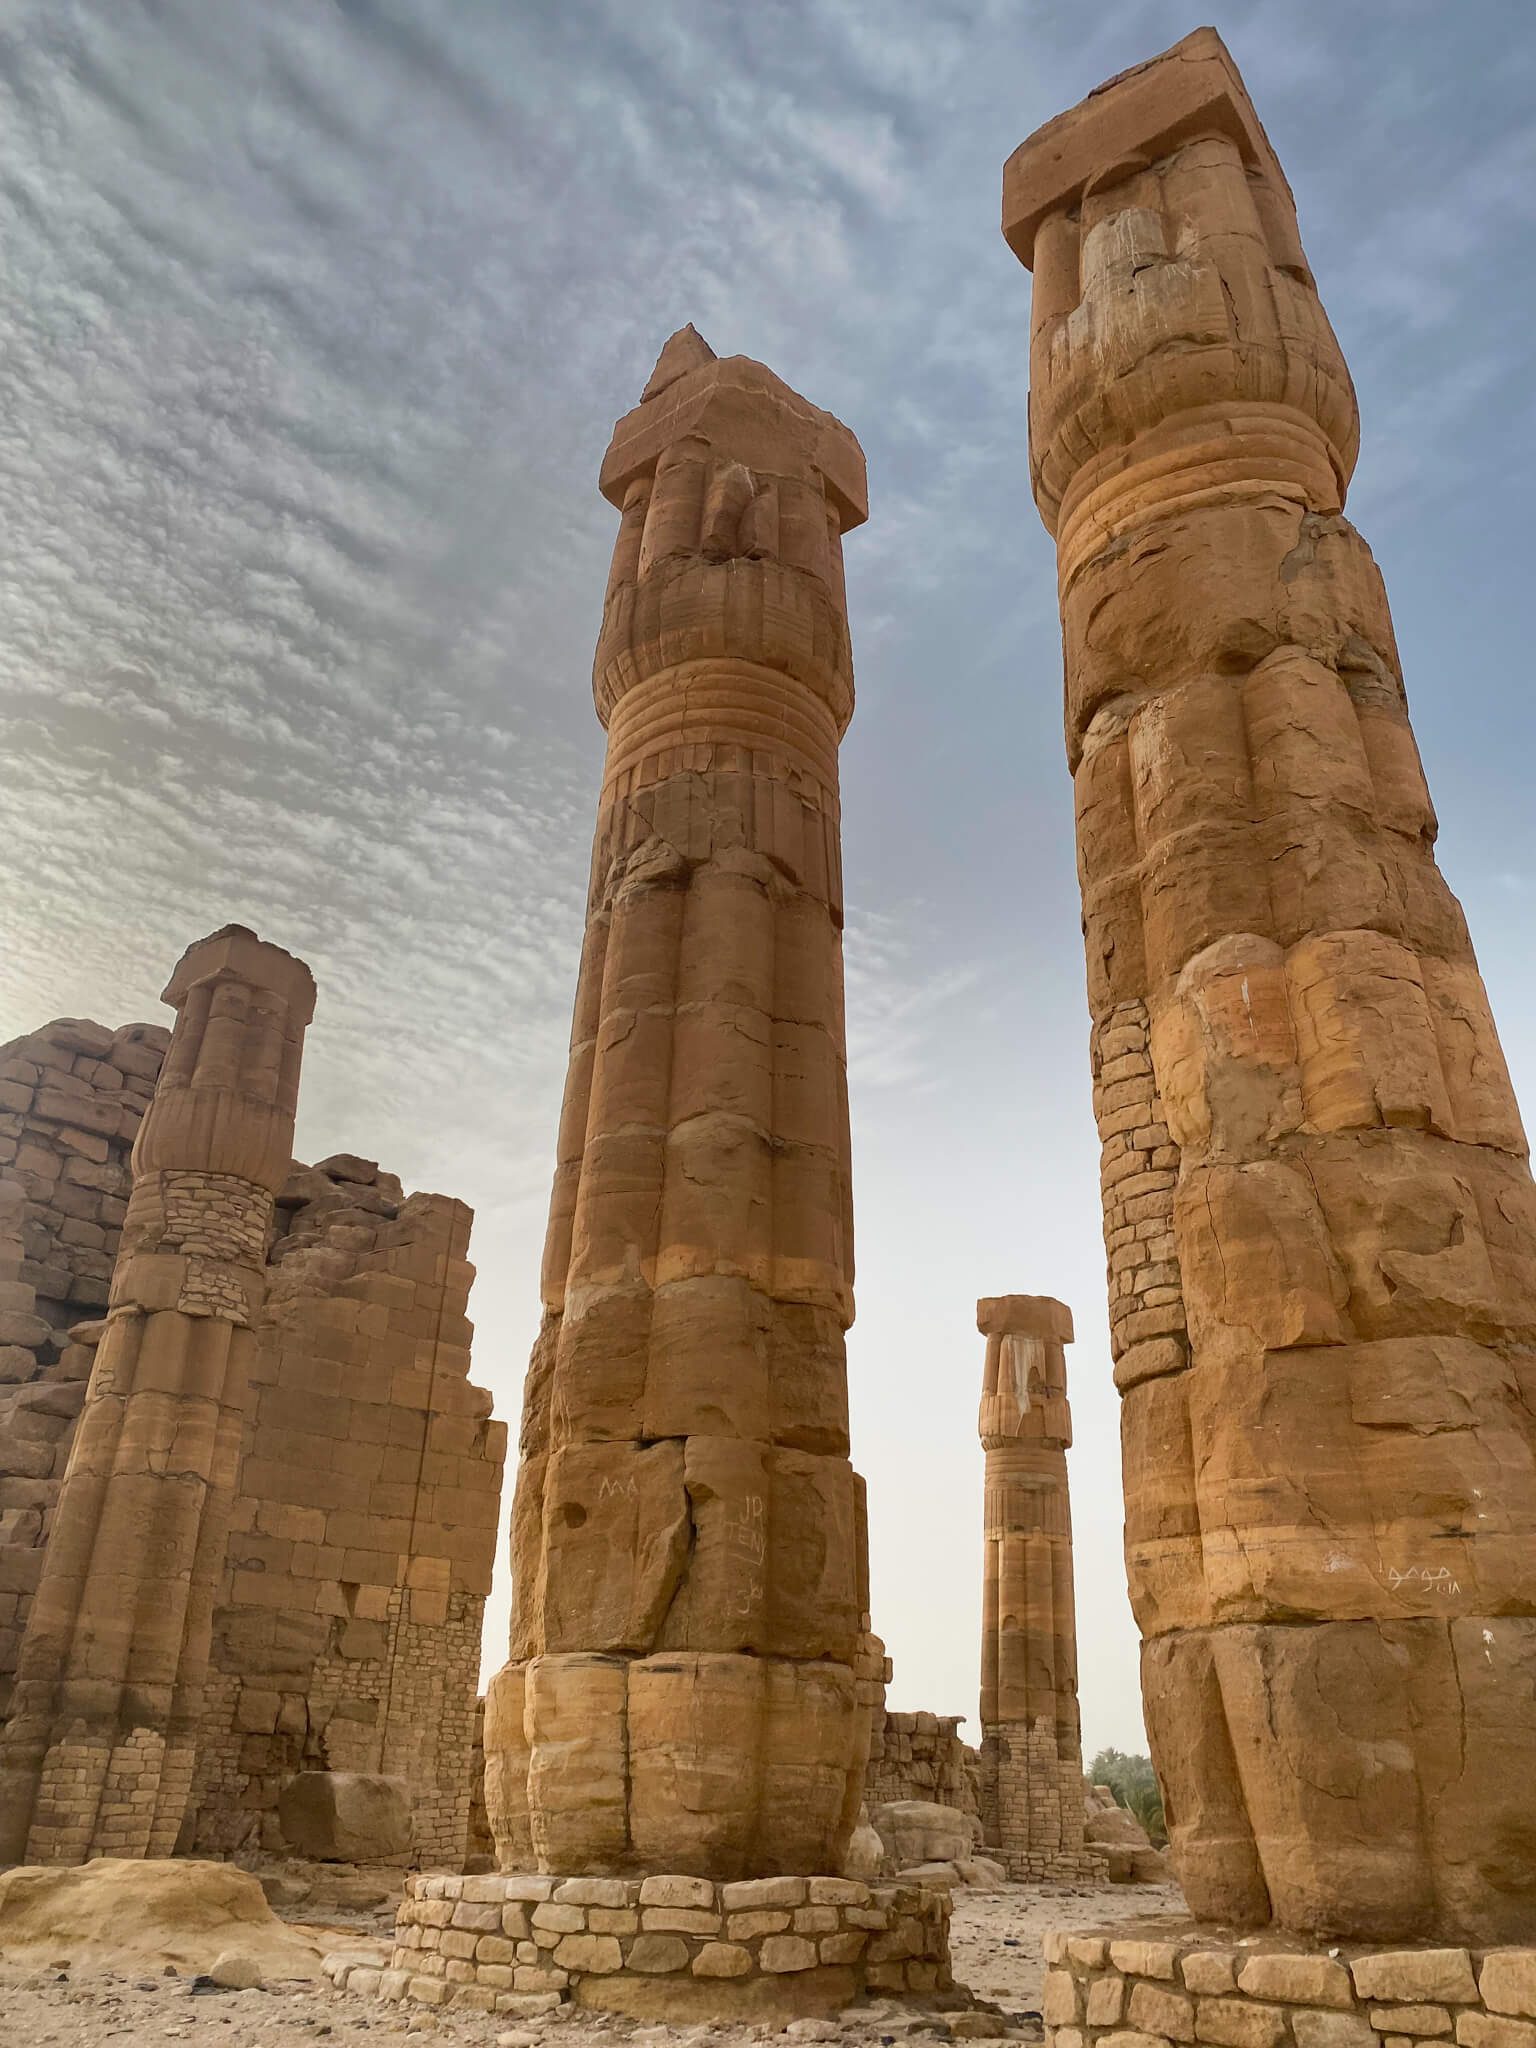 Huge pillars towering into the sky.